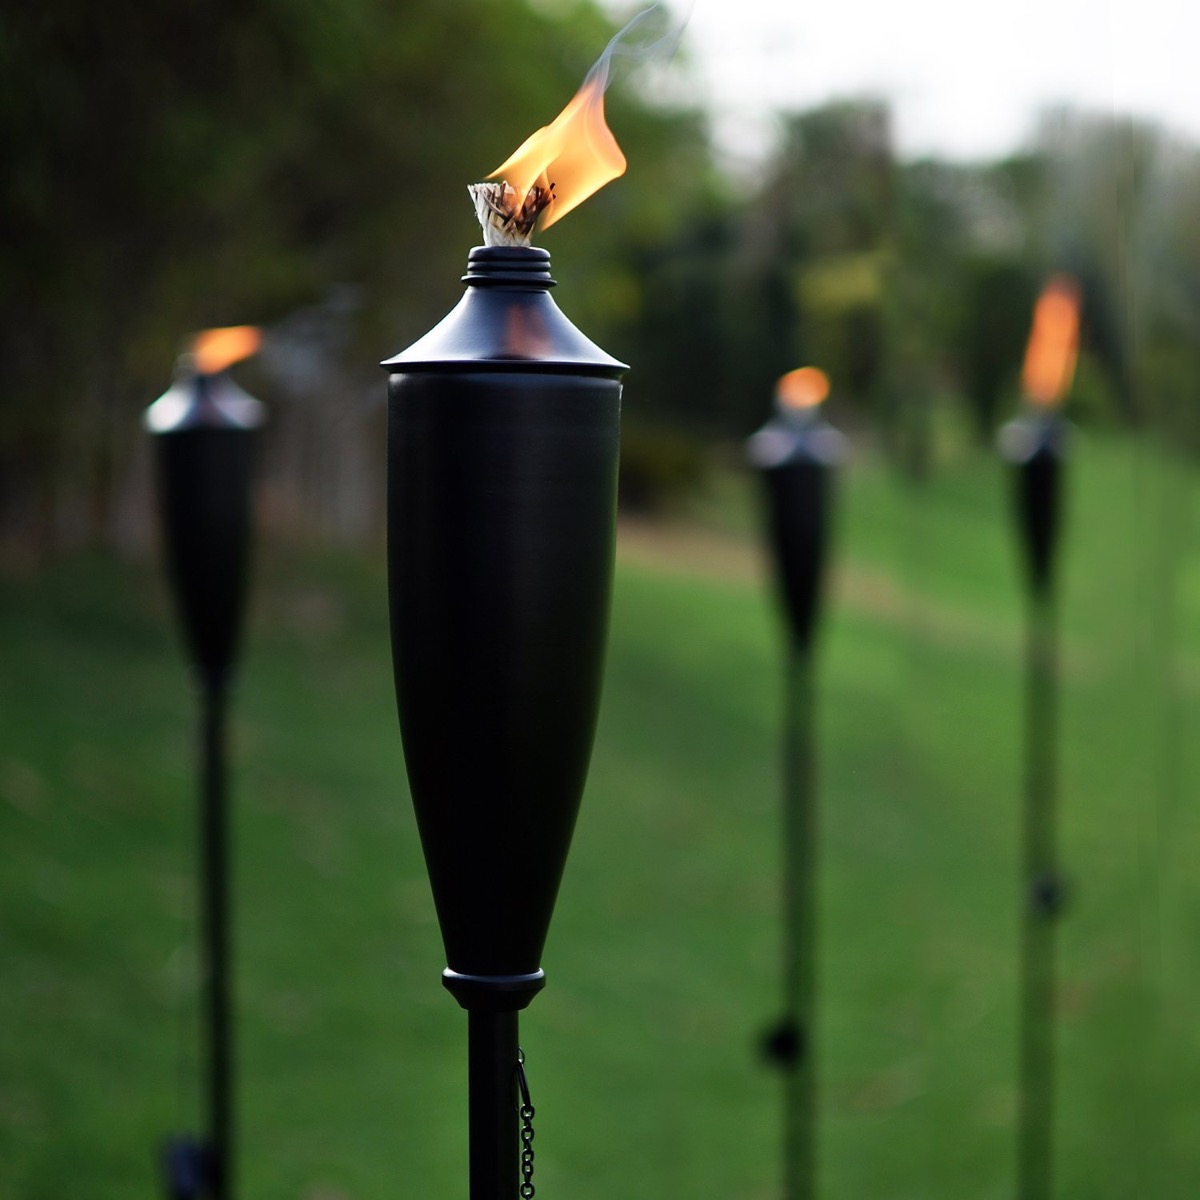 citronella garden torches against grassy backdrop